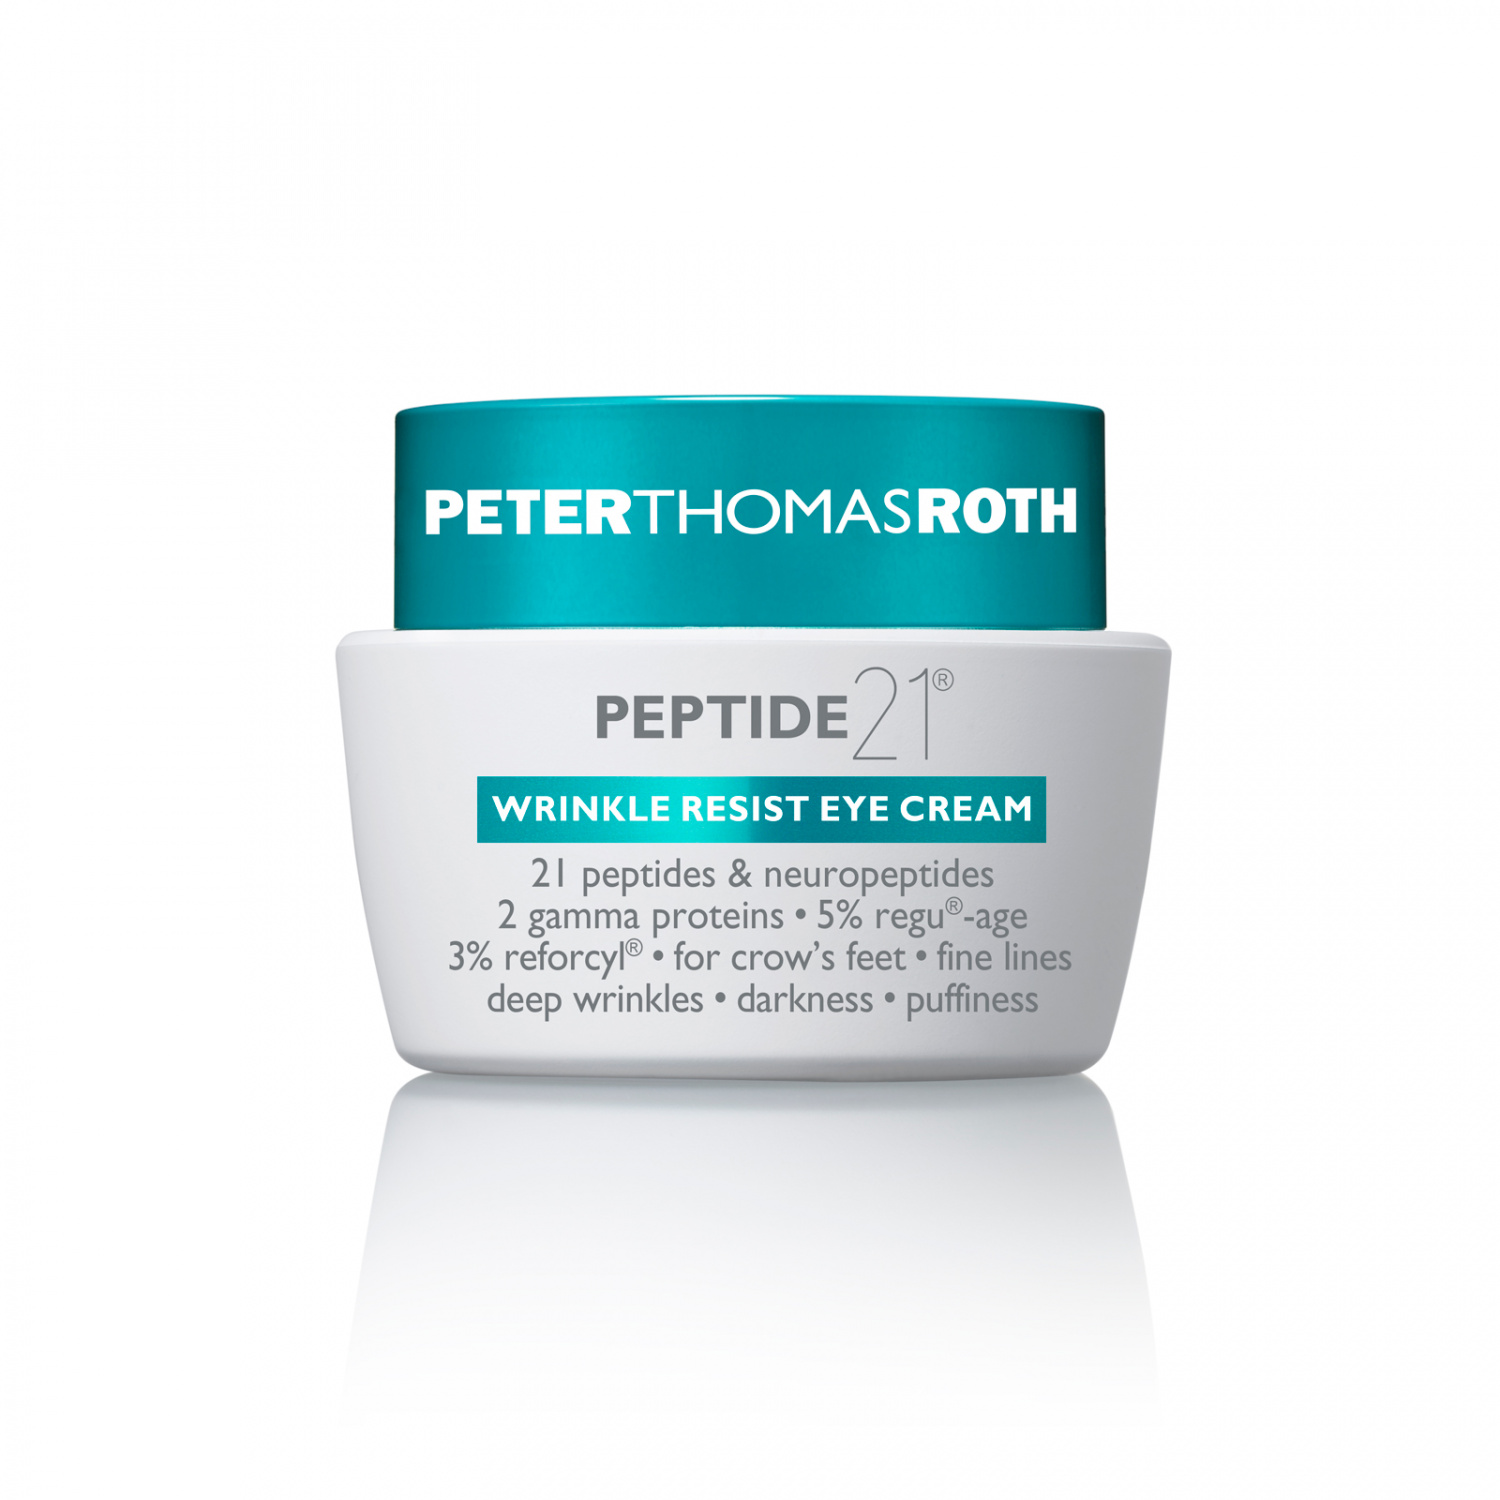 Peter Thomas Roth Peptide 21 Eye Cream 30ml - интернет-магазин профессиональной косметики Spadream, изображение 39056